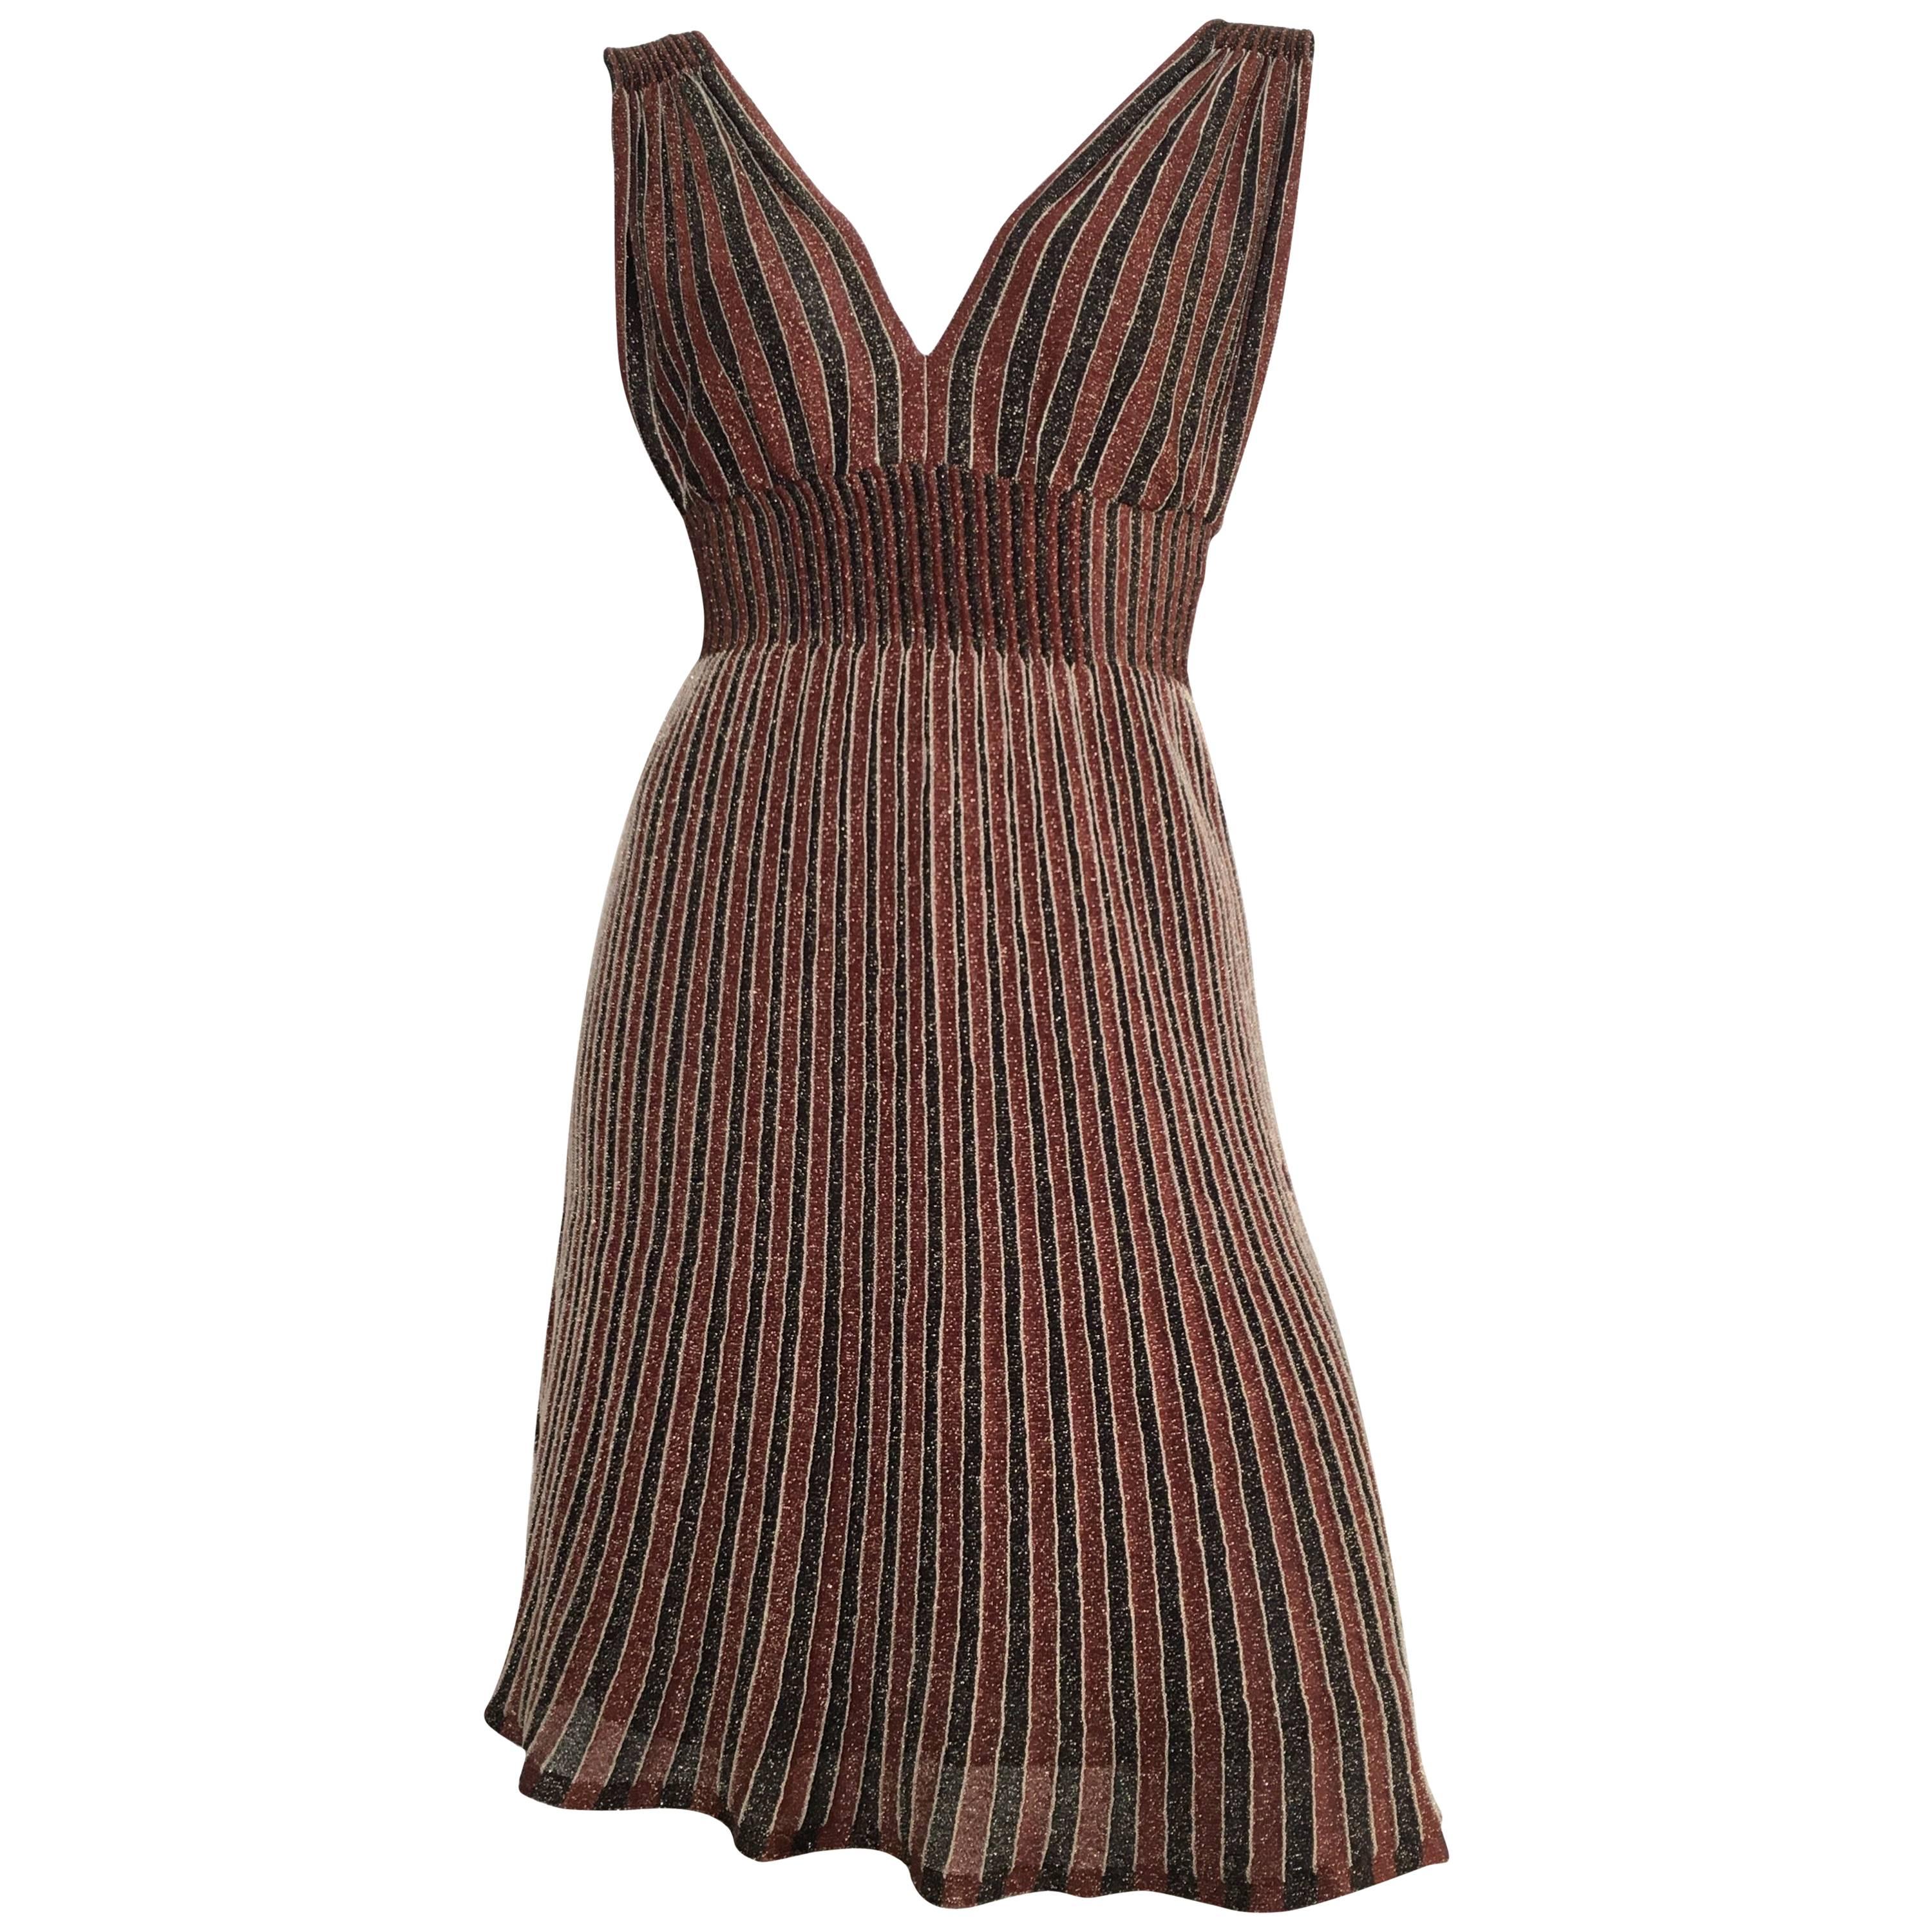 Missoni Metallic Knit Cocktail Dress Size 4/6. For Sale